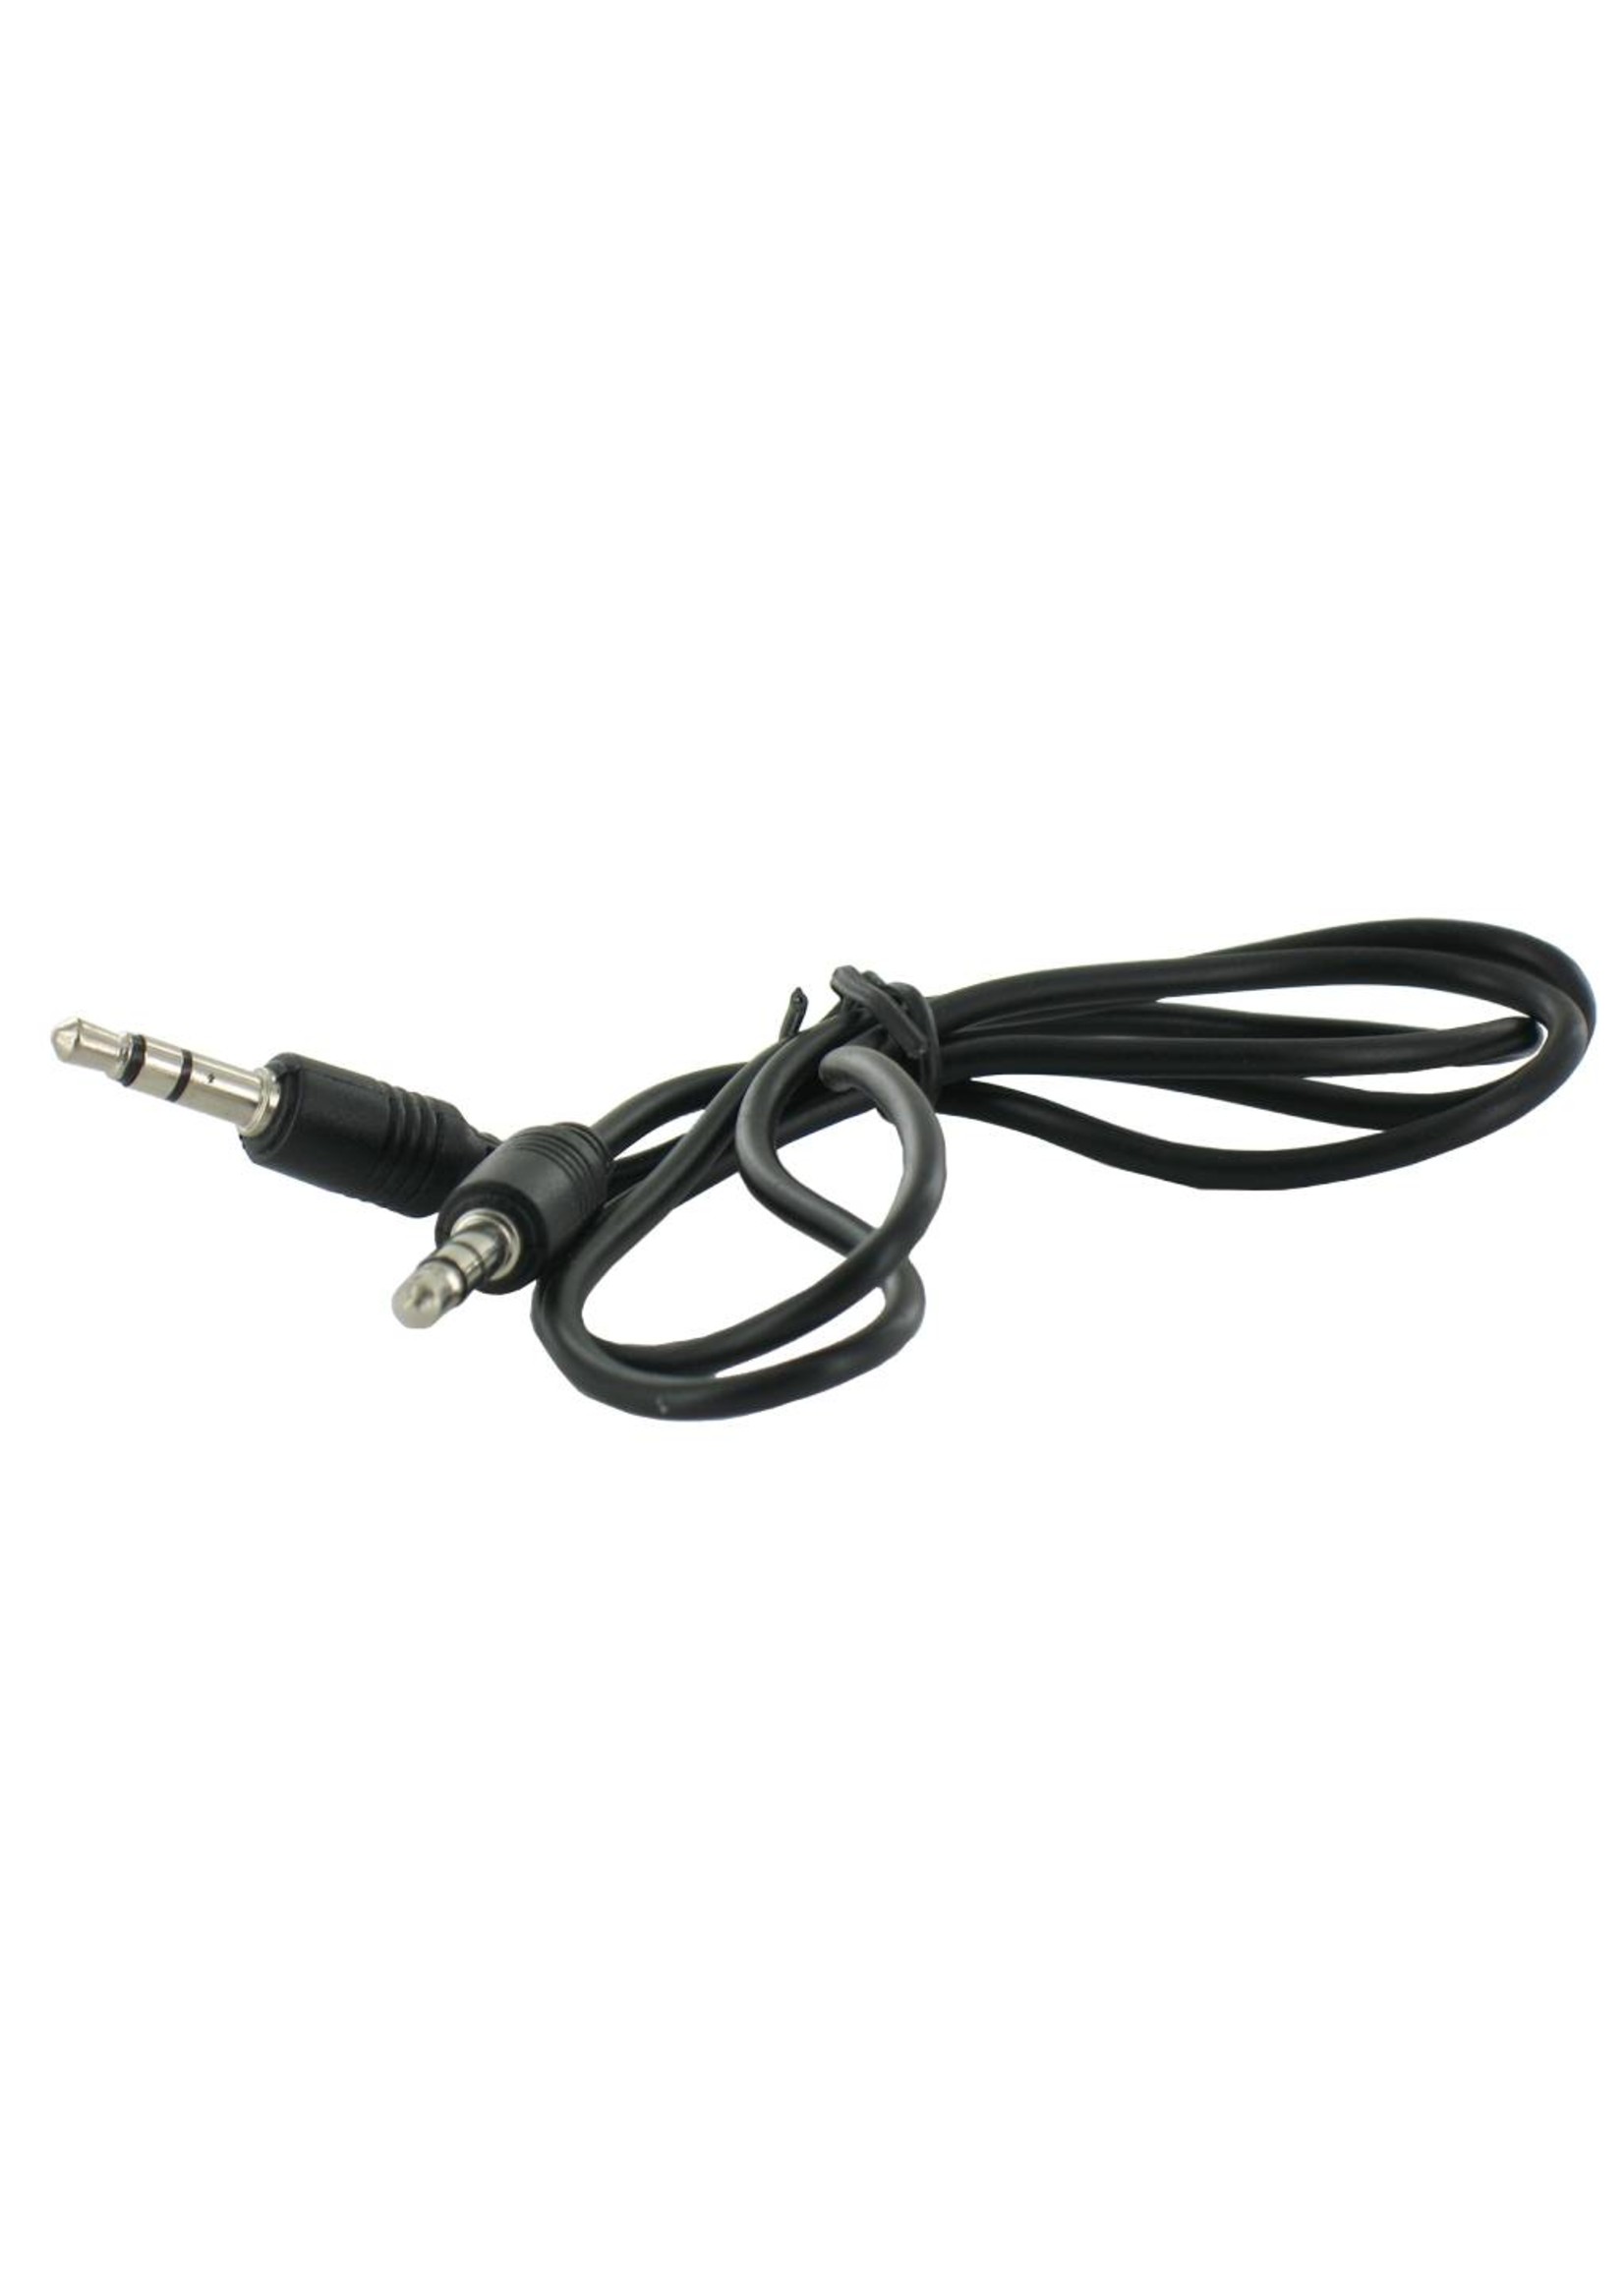 Mini HDMI naar VGA + Audio Converter Kabel